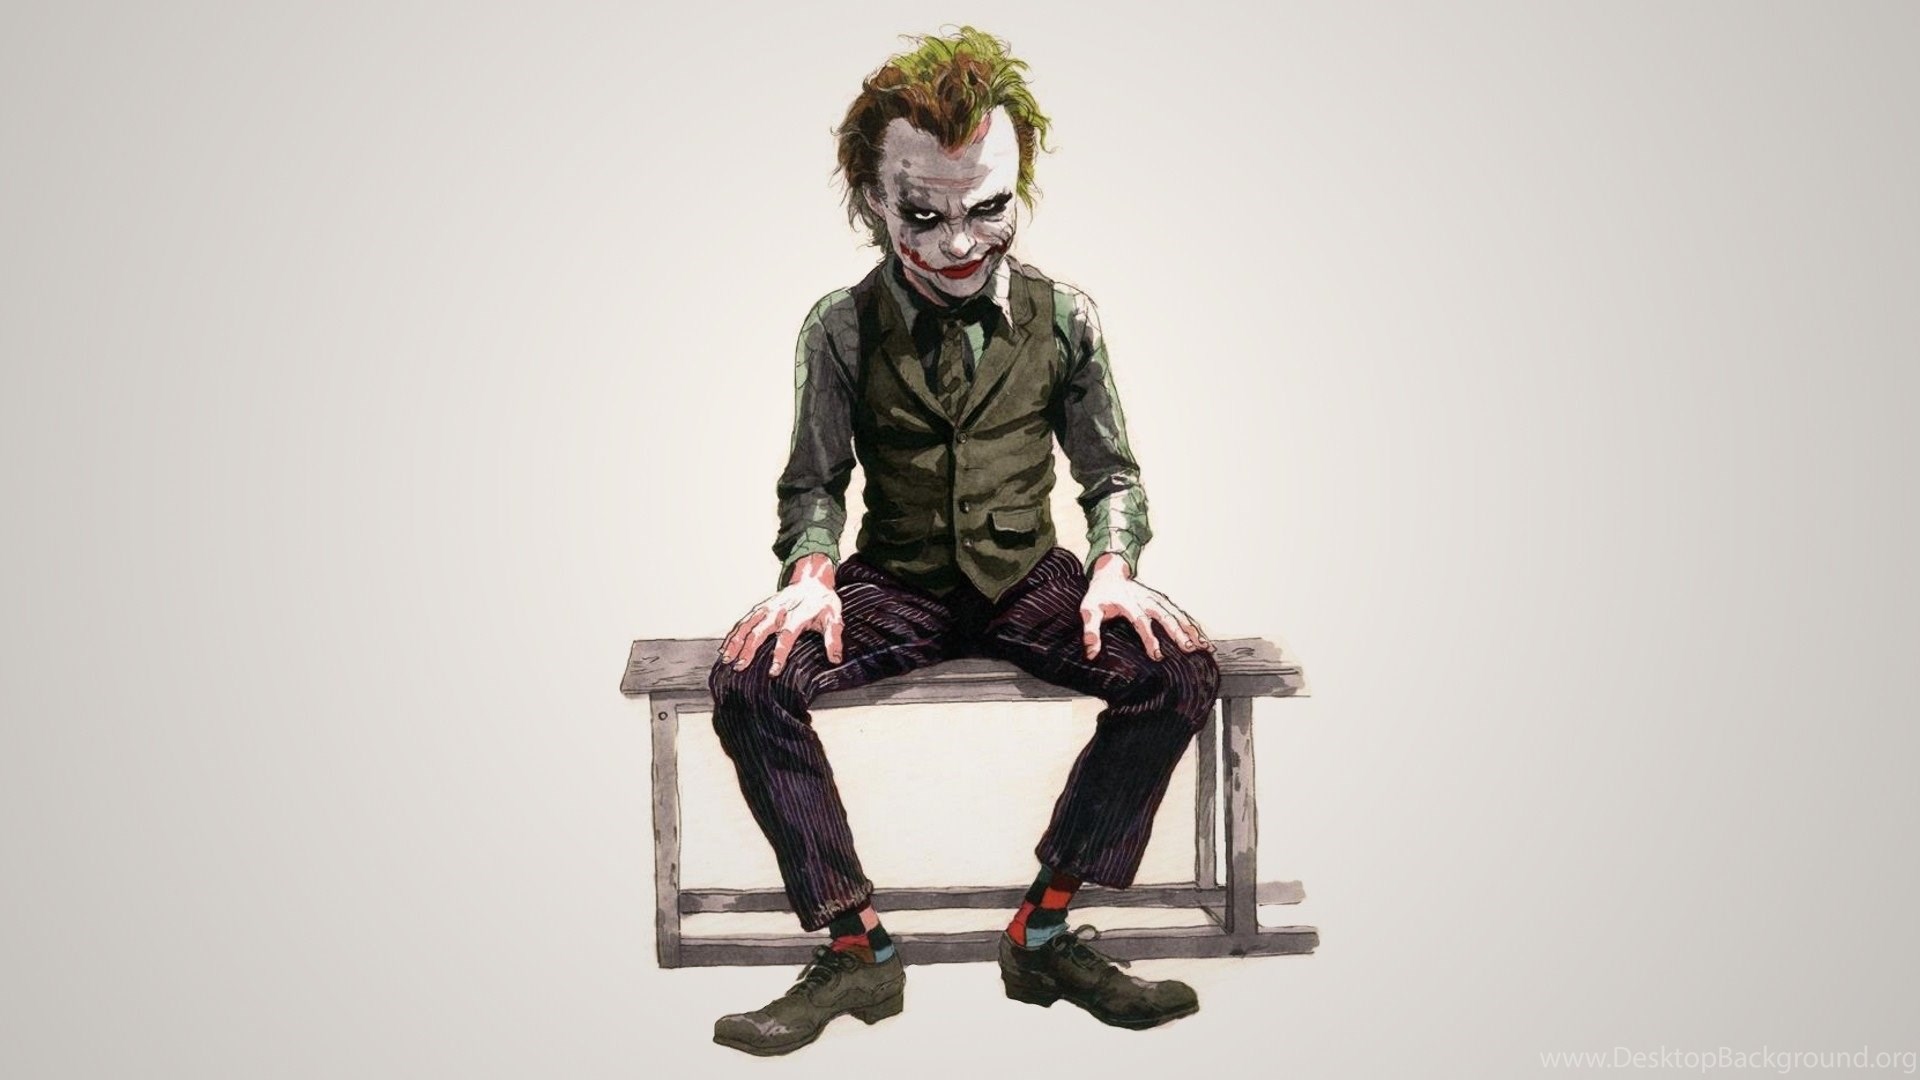 Evil Joker Cartoon Wallpaper 1920x1080 239824 Desktop Background